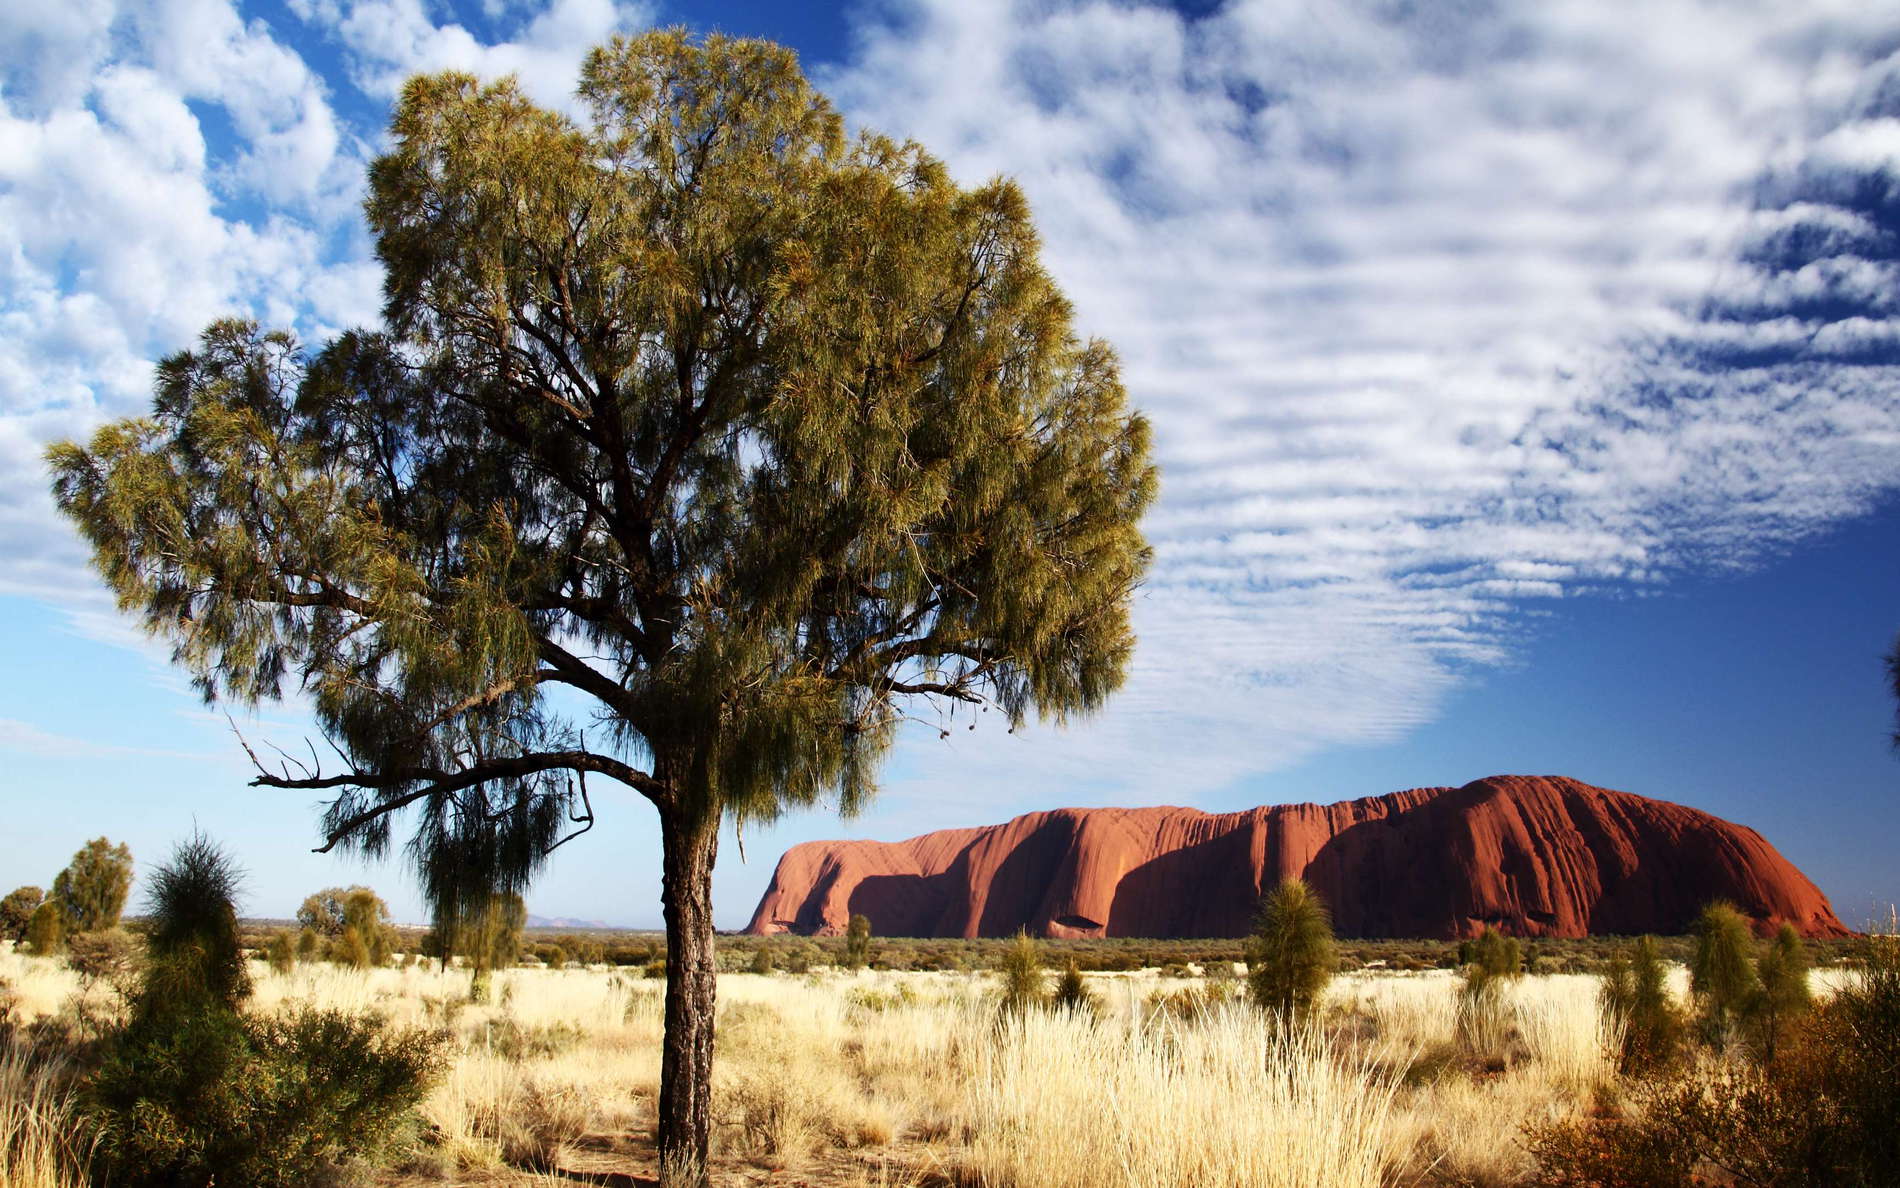 Uluru / Ayers Rock and Allocasuarina decaisneana